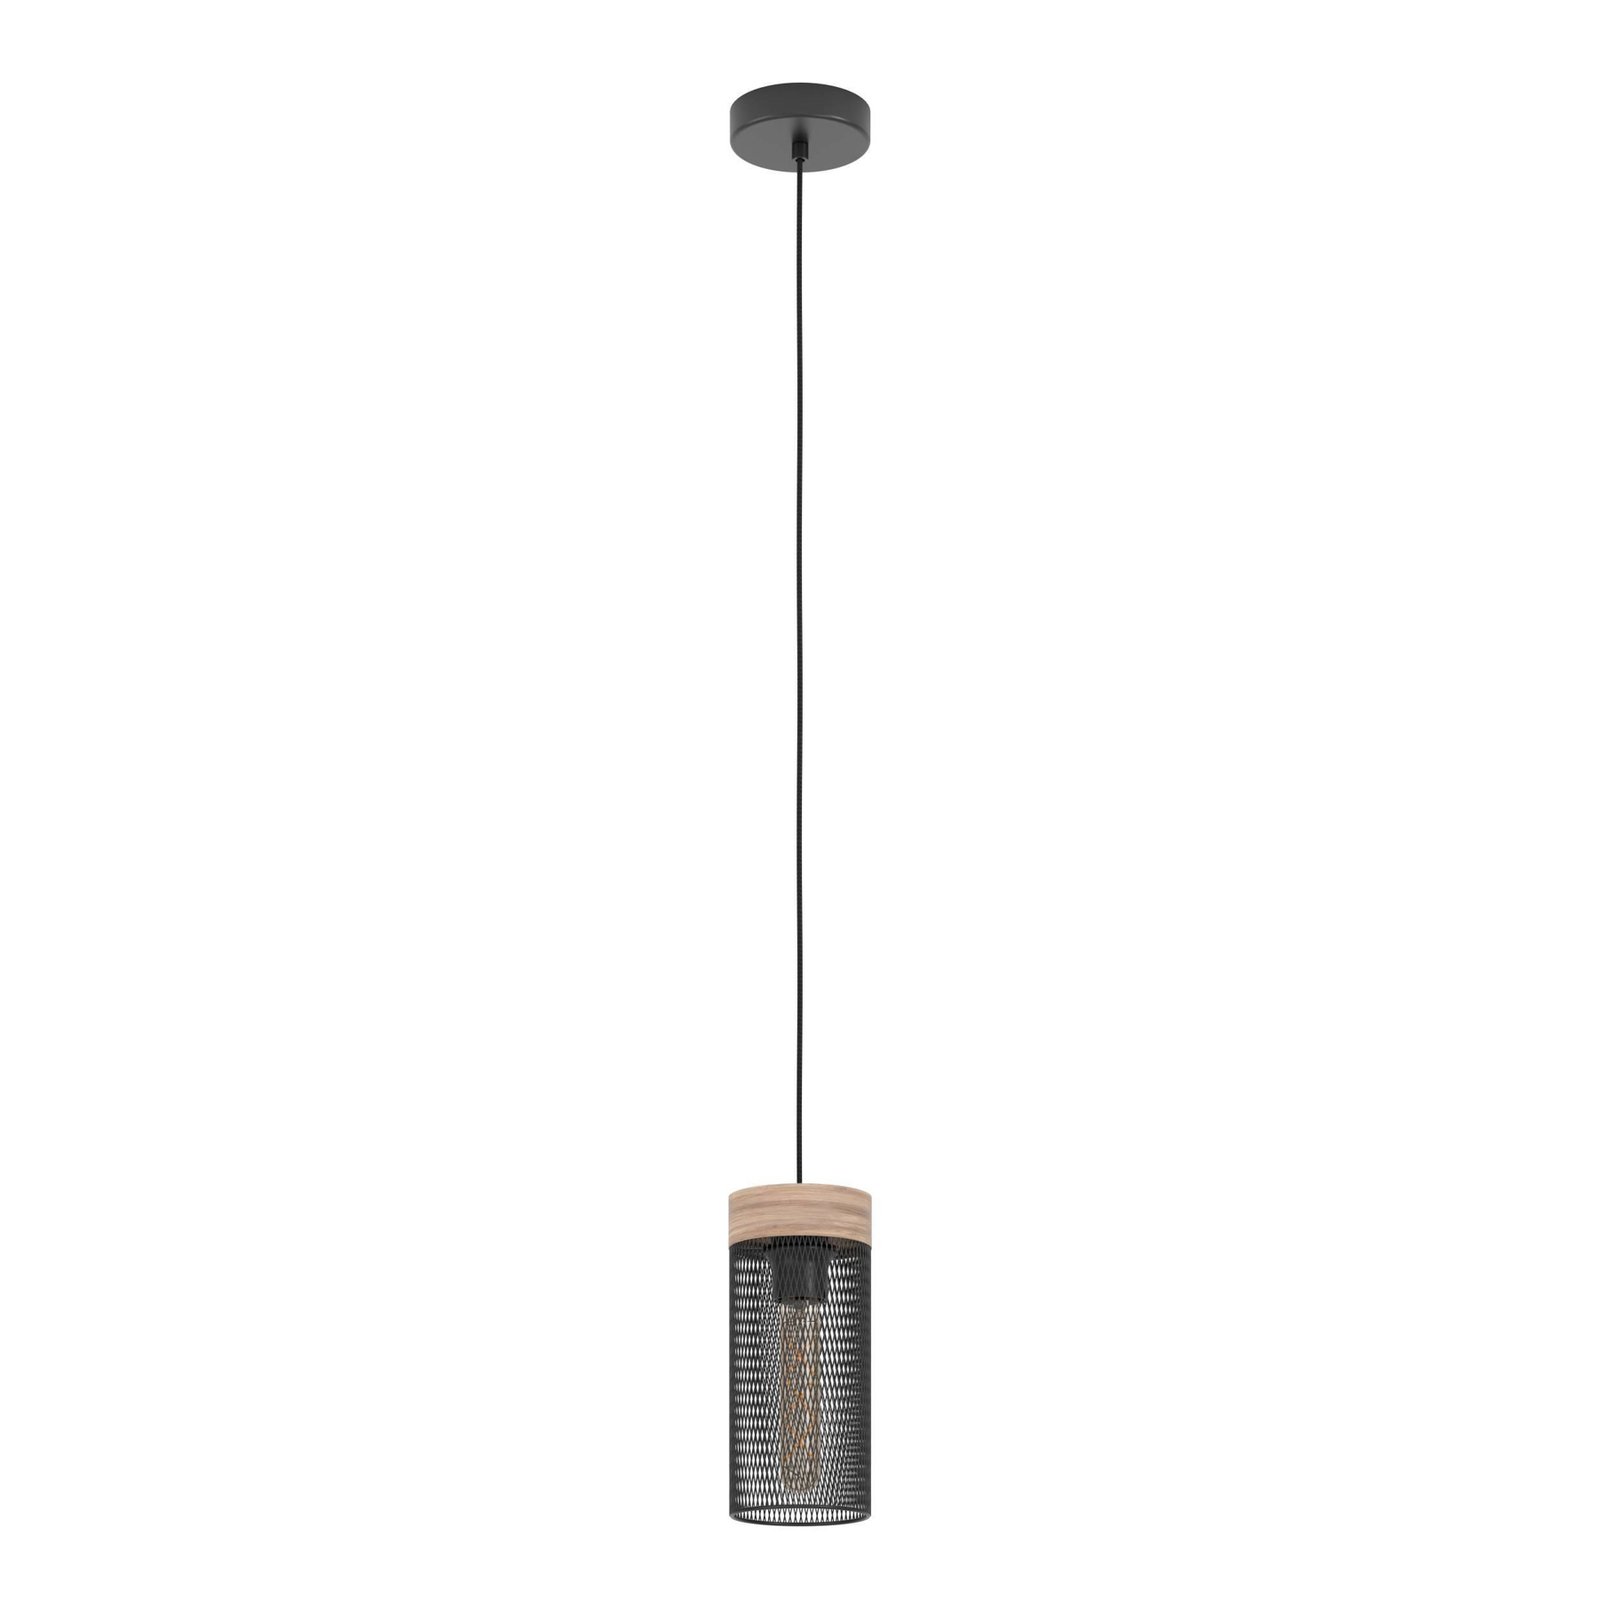 Hanglamp Kilnsdale, Ø 11 cm, zwart/bruin, staal